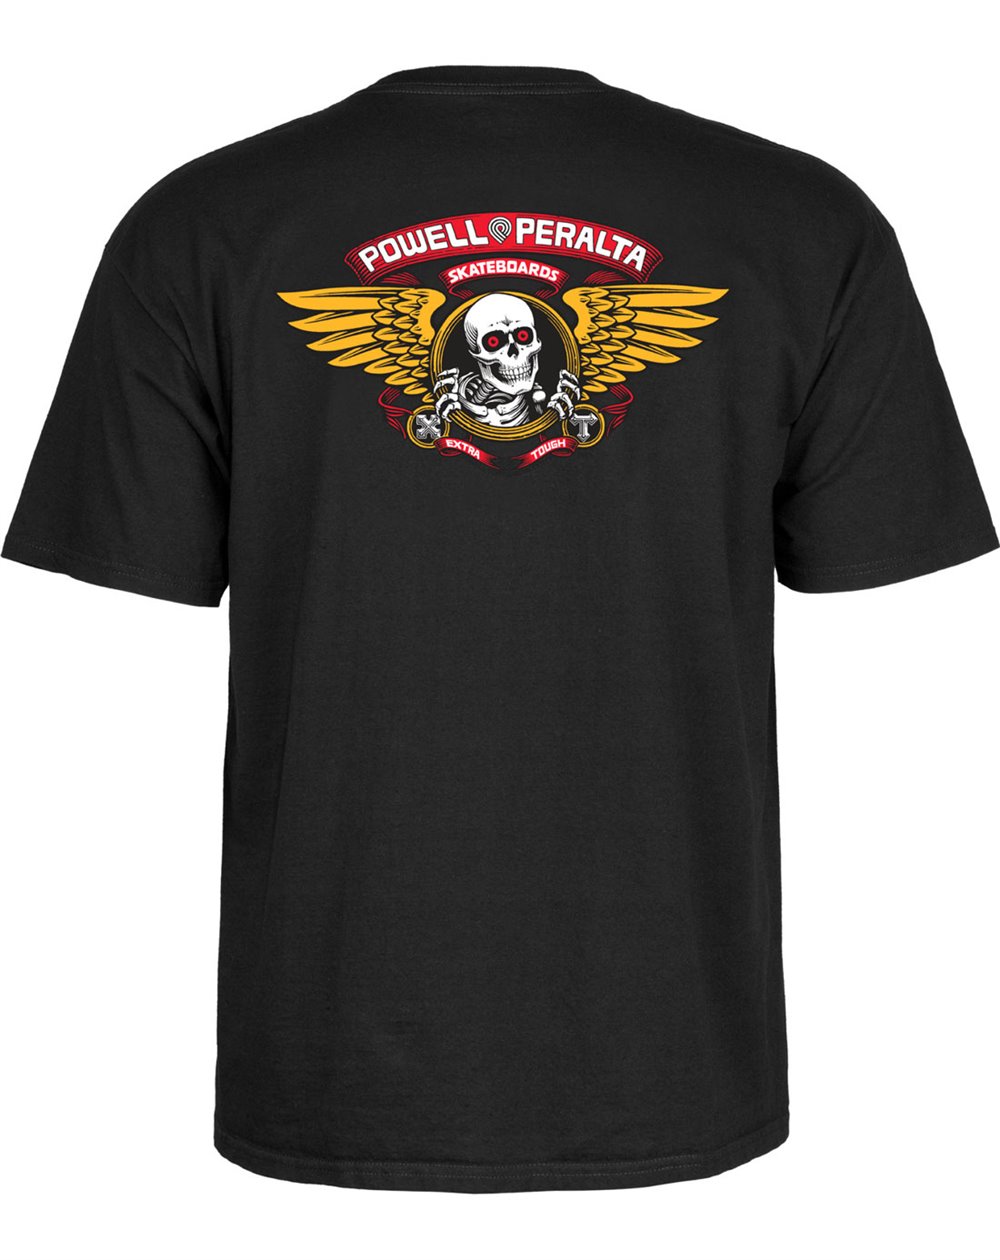 Powell Peralta Men's T-Shirt Winged Ripper Black